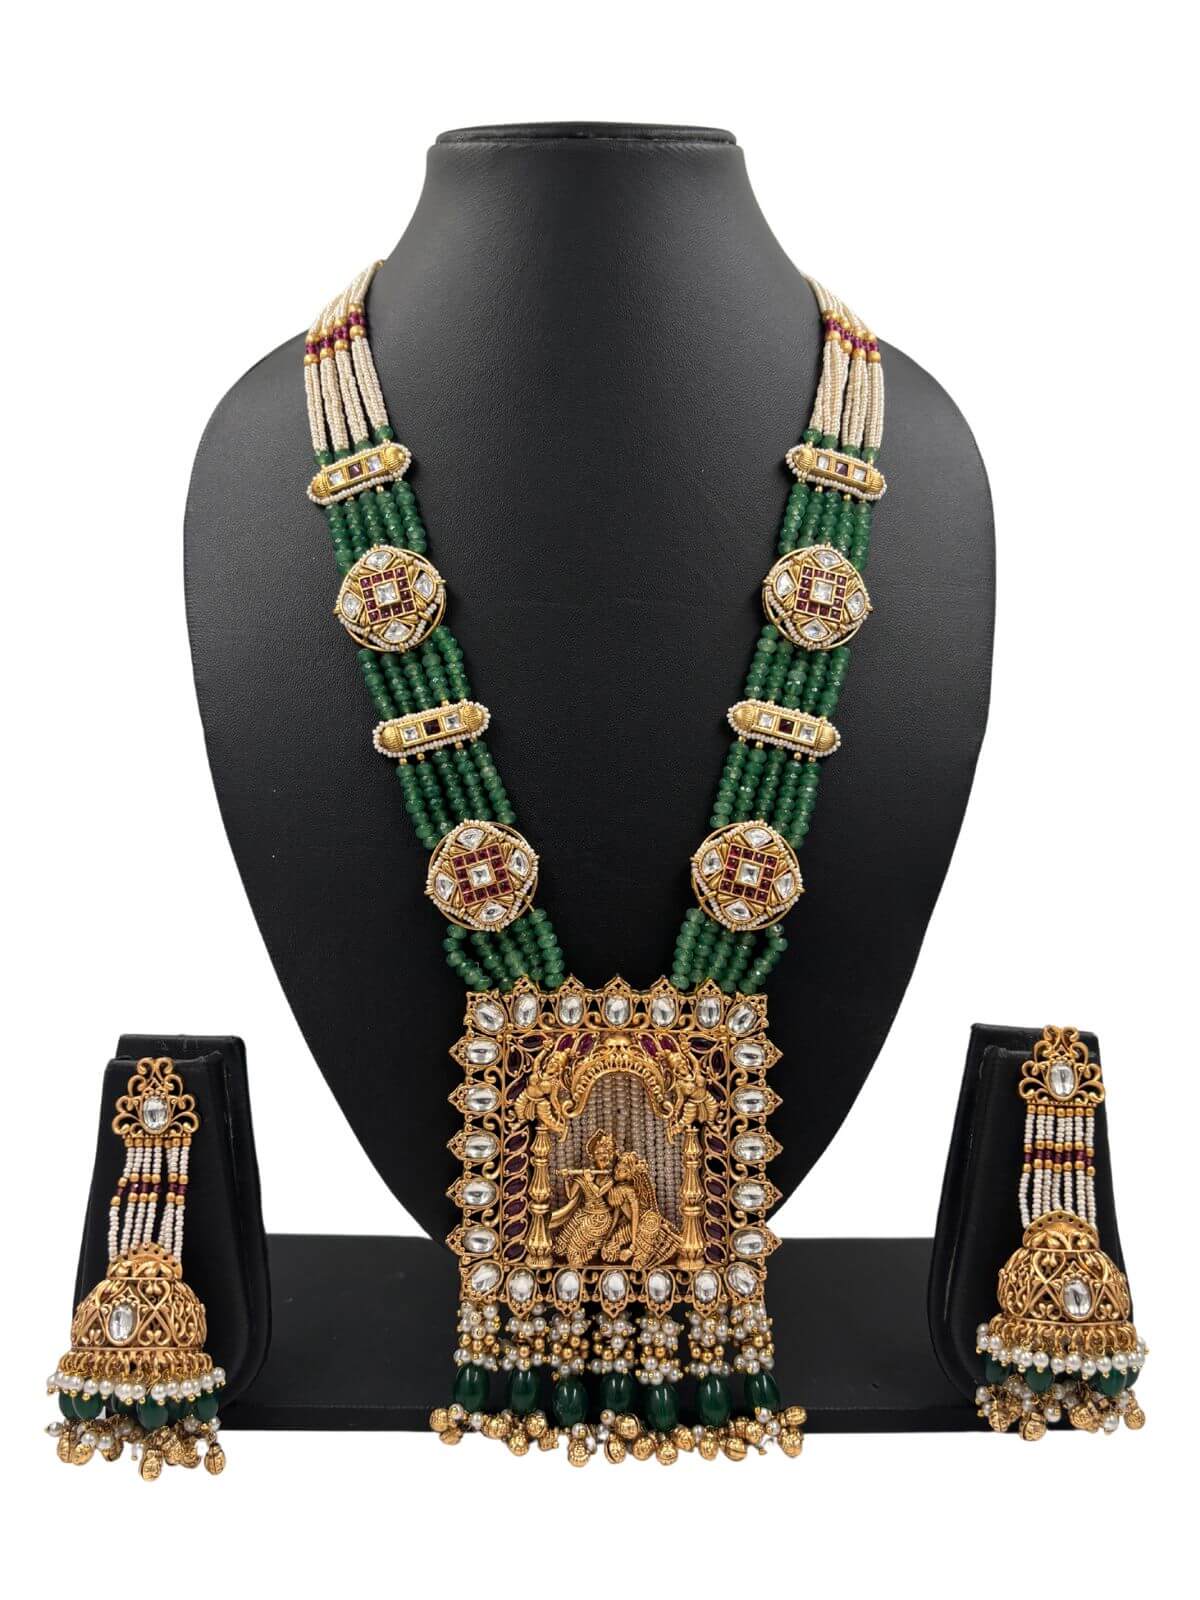 Suhasini Long Antique Golden Radha Krishna Temple Necklace Set With Layered Beads